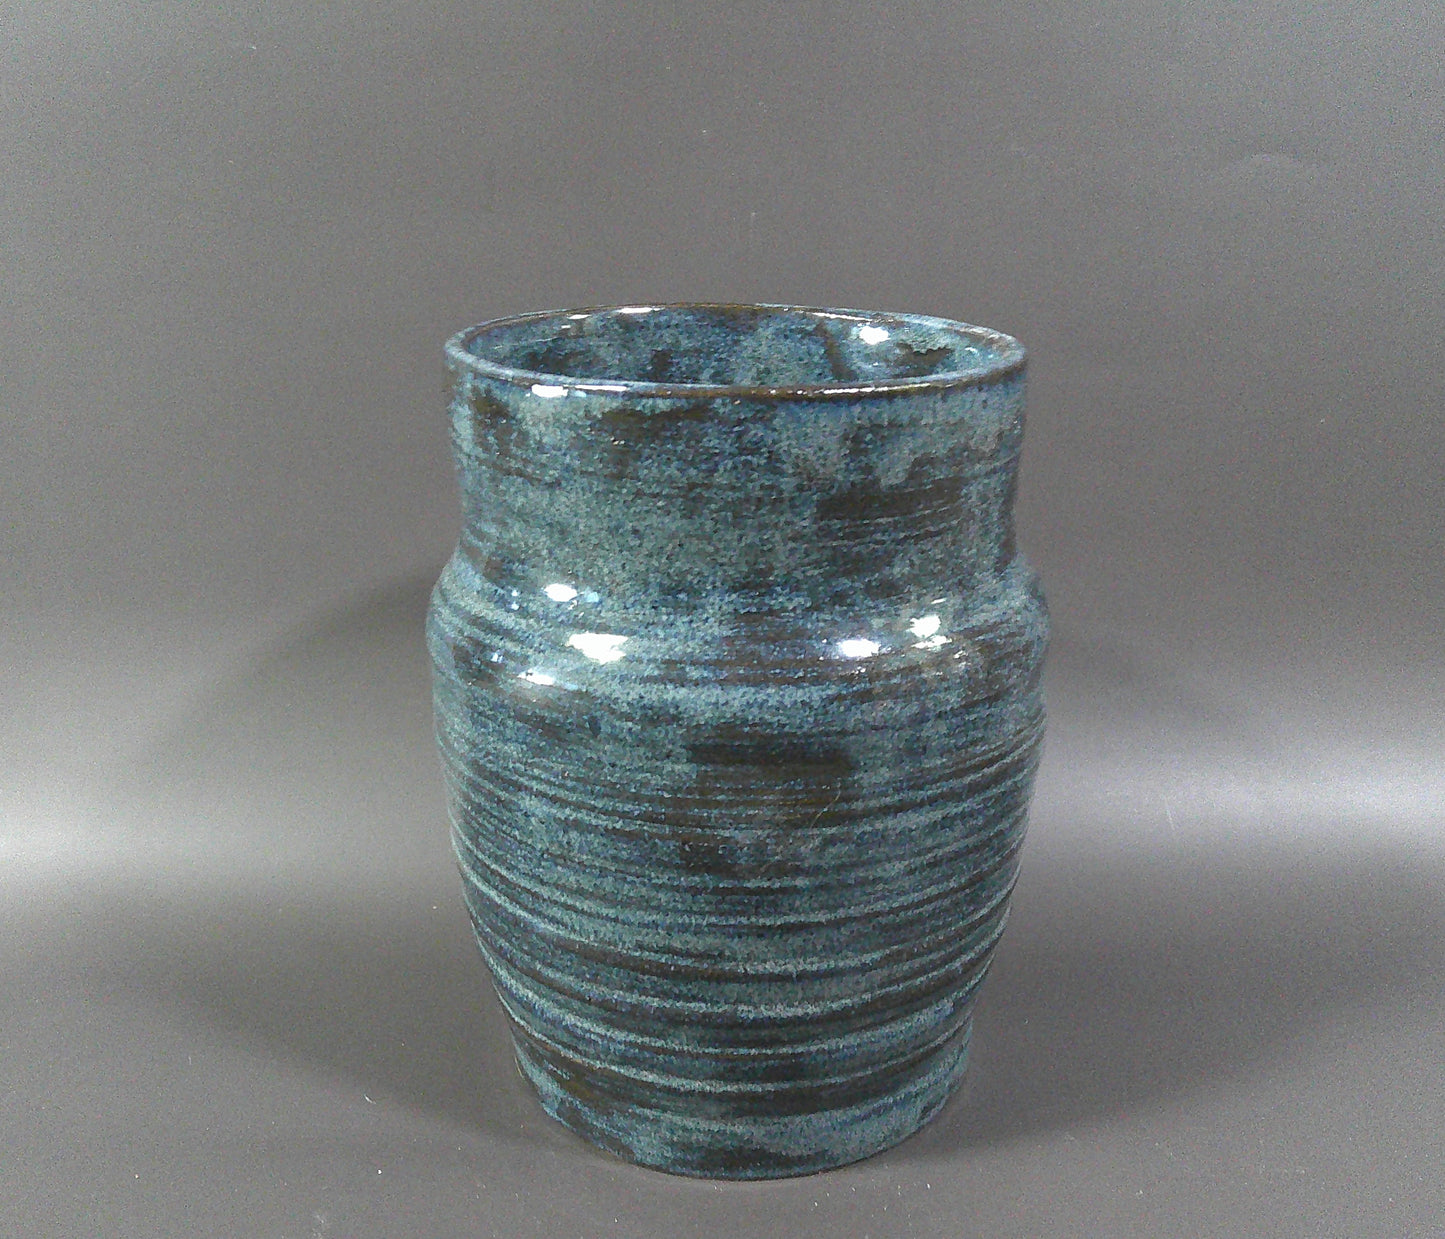 Textured Blue/Black Pottery piece $35